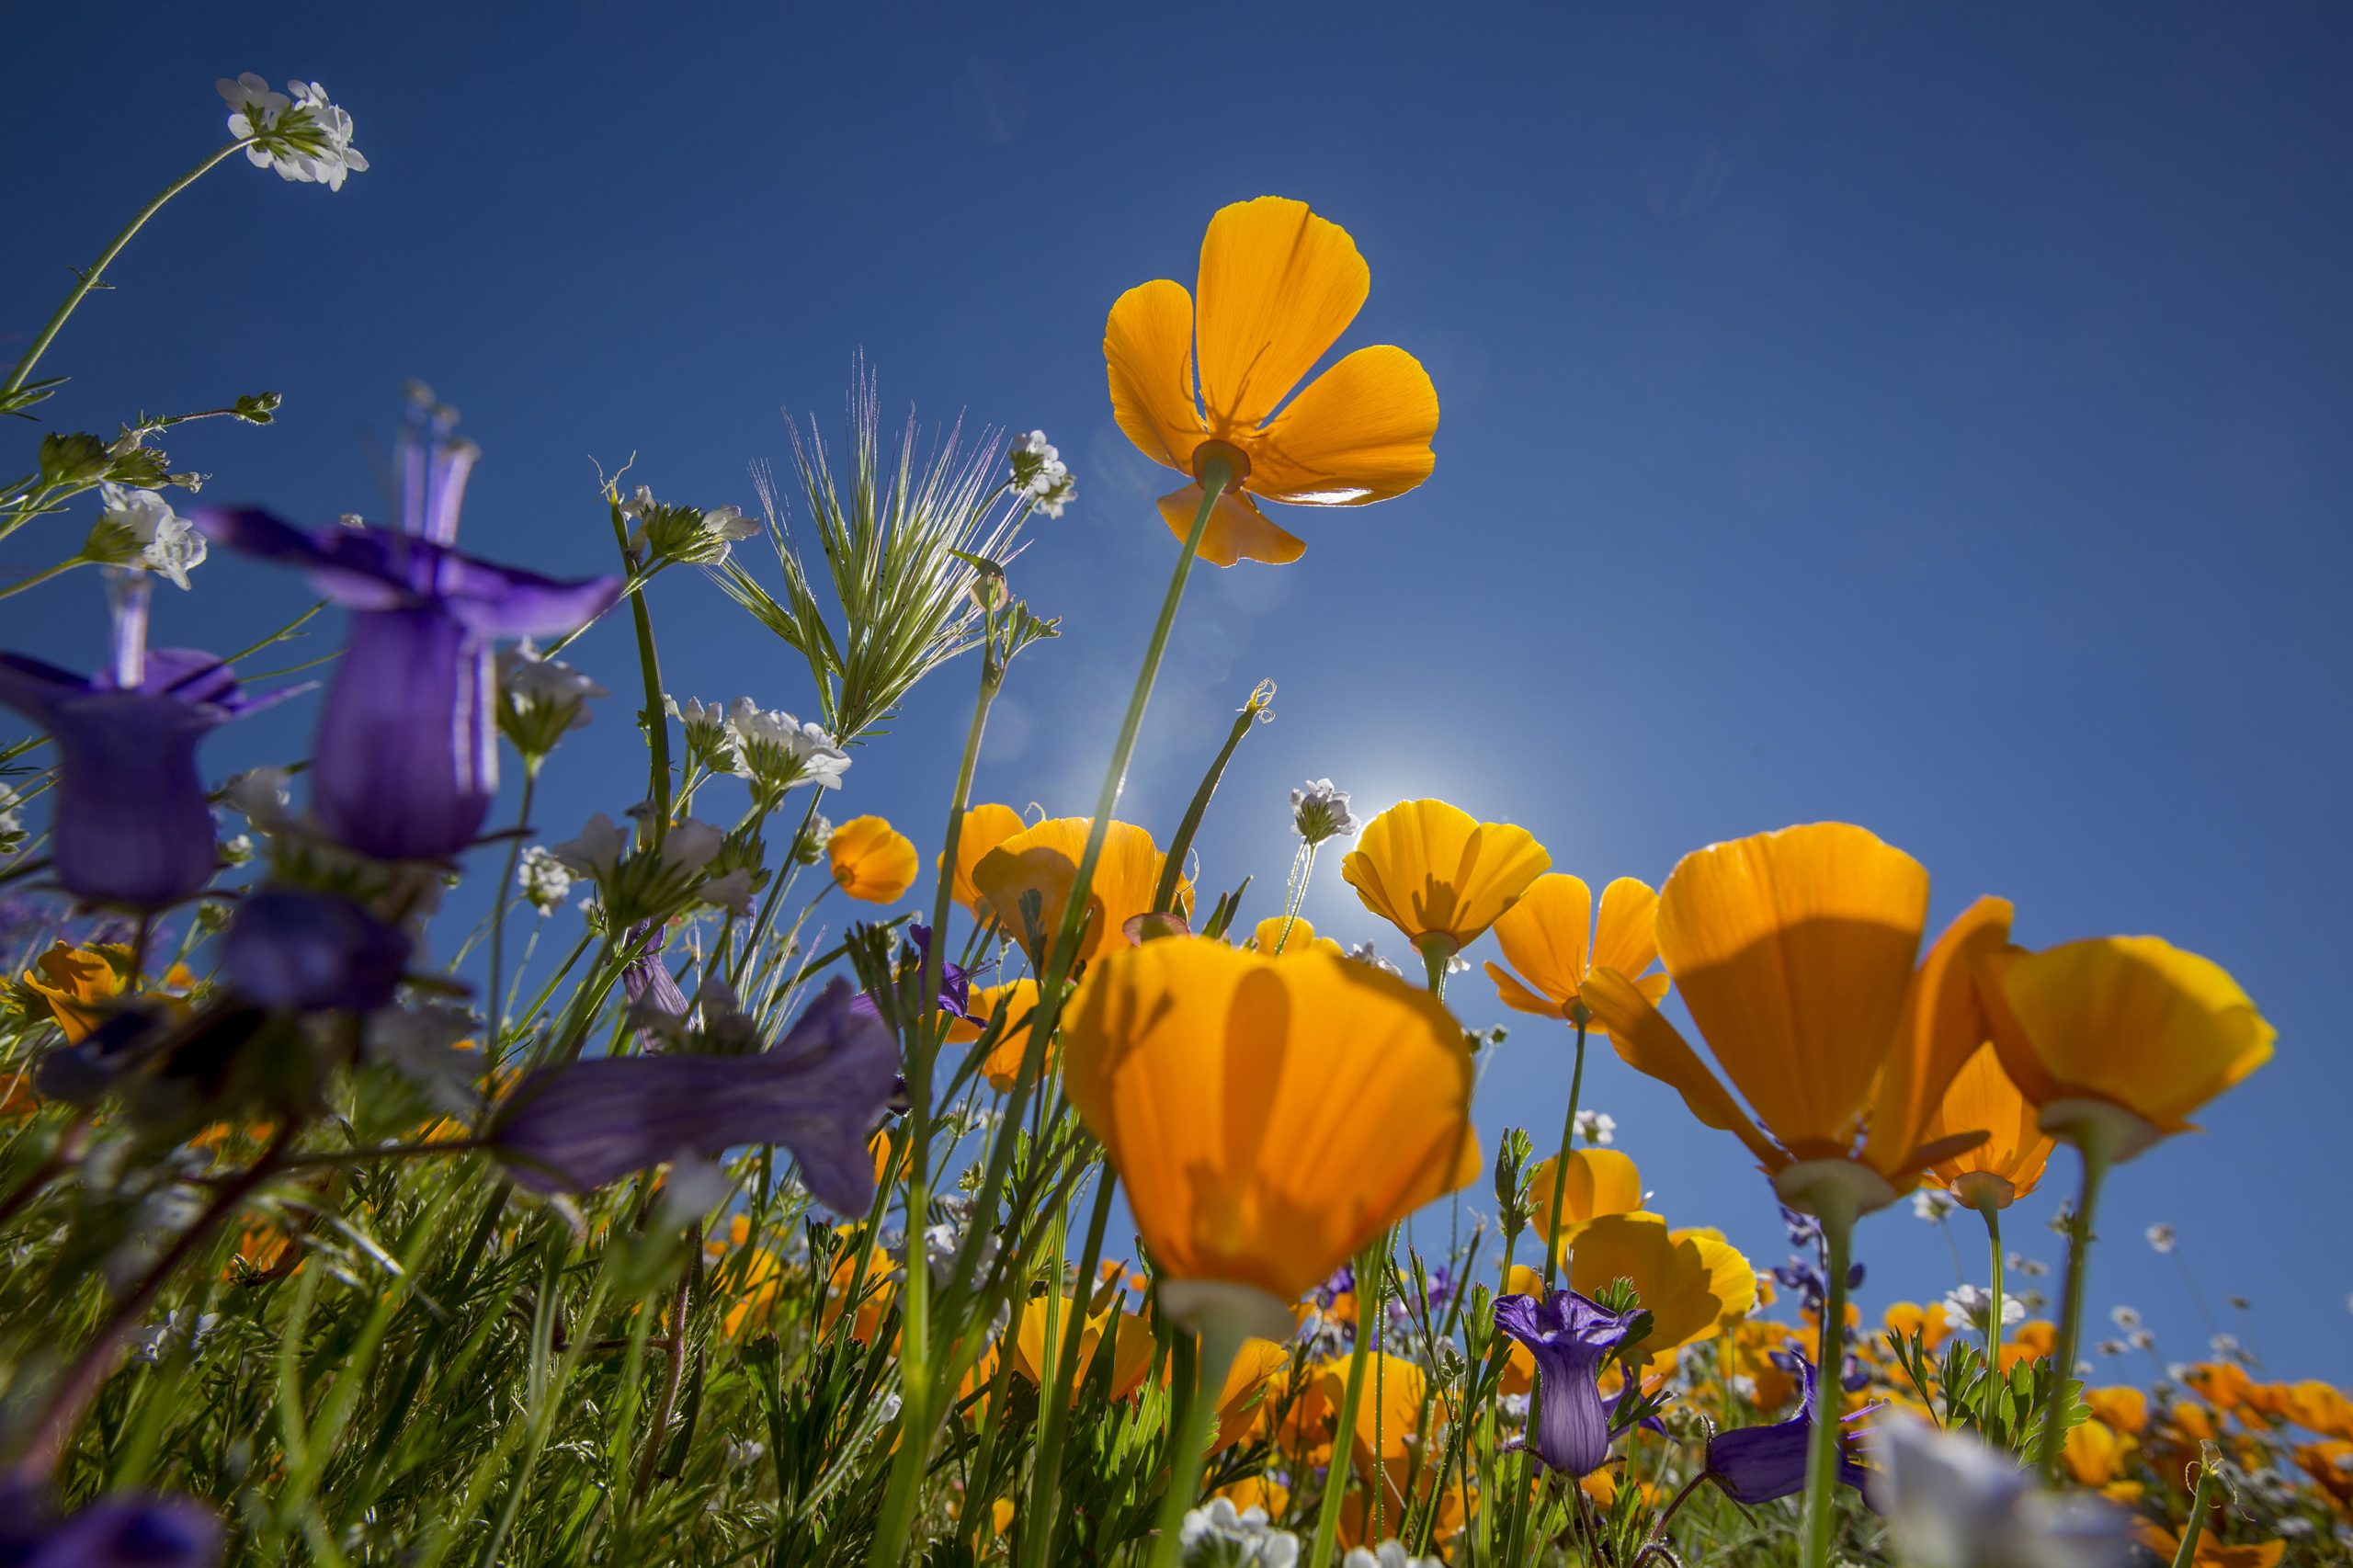 Carlsbad, California - Super bloom: Spectacular spring flowers of 2017